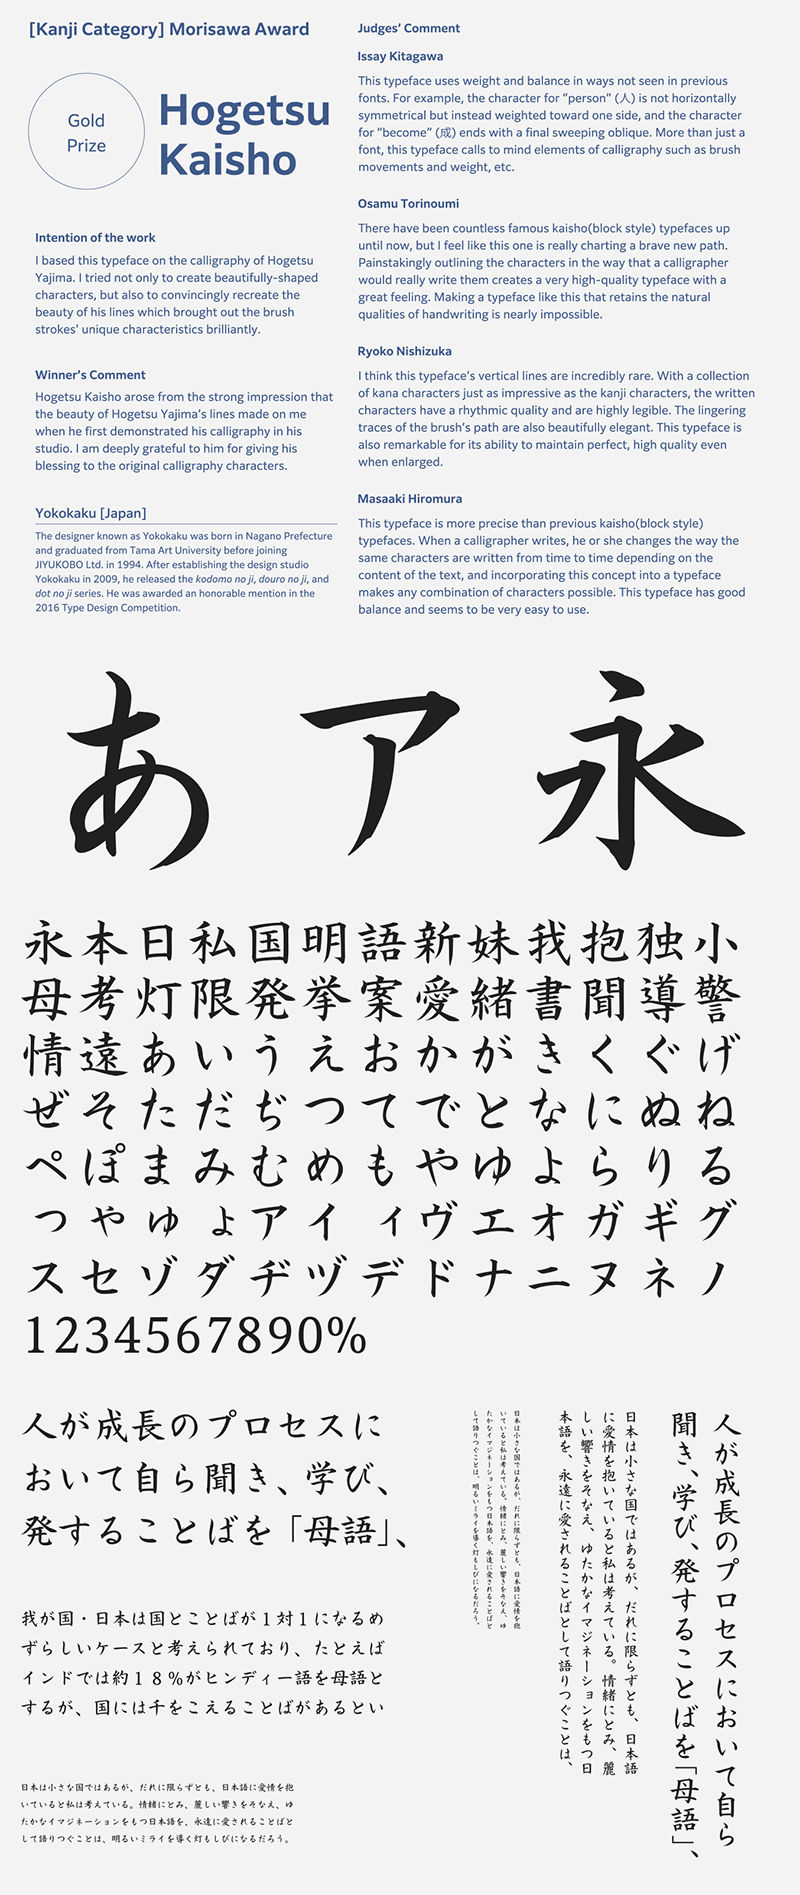 Шрифтовой конкурс Morisawa